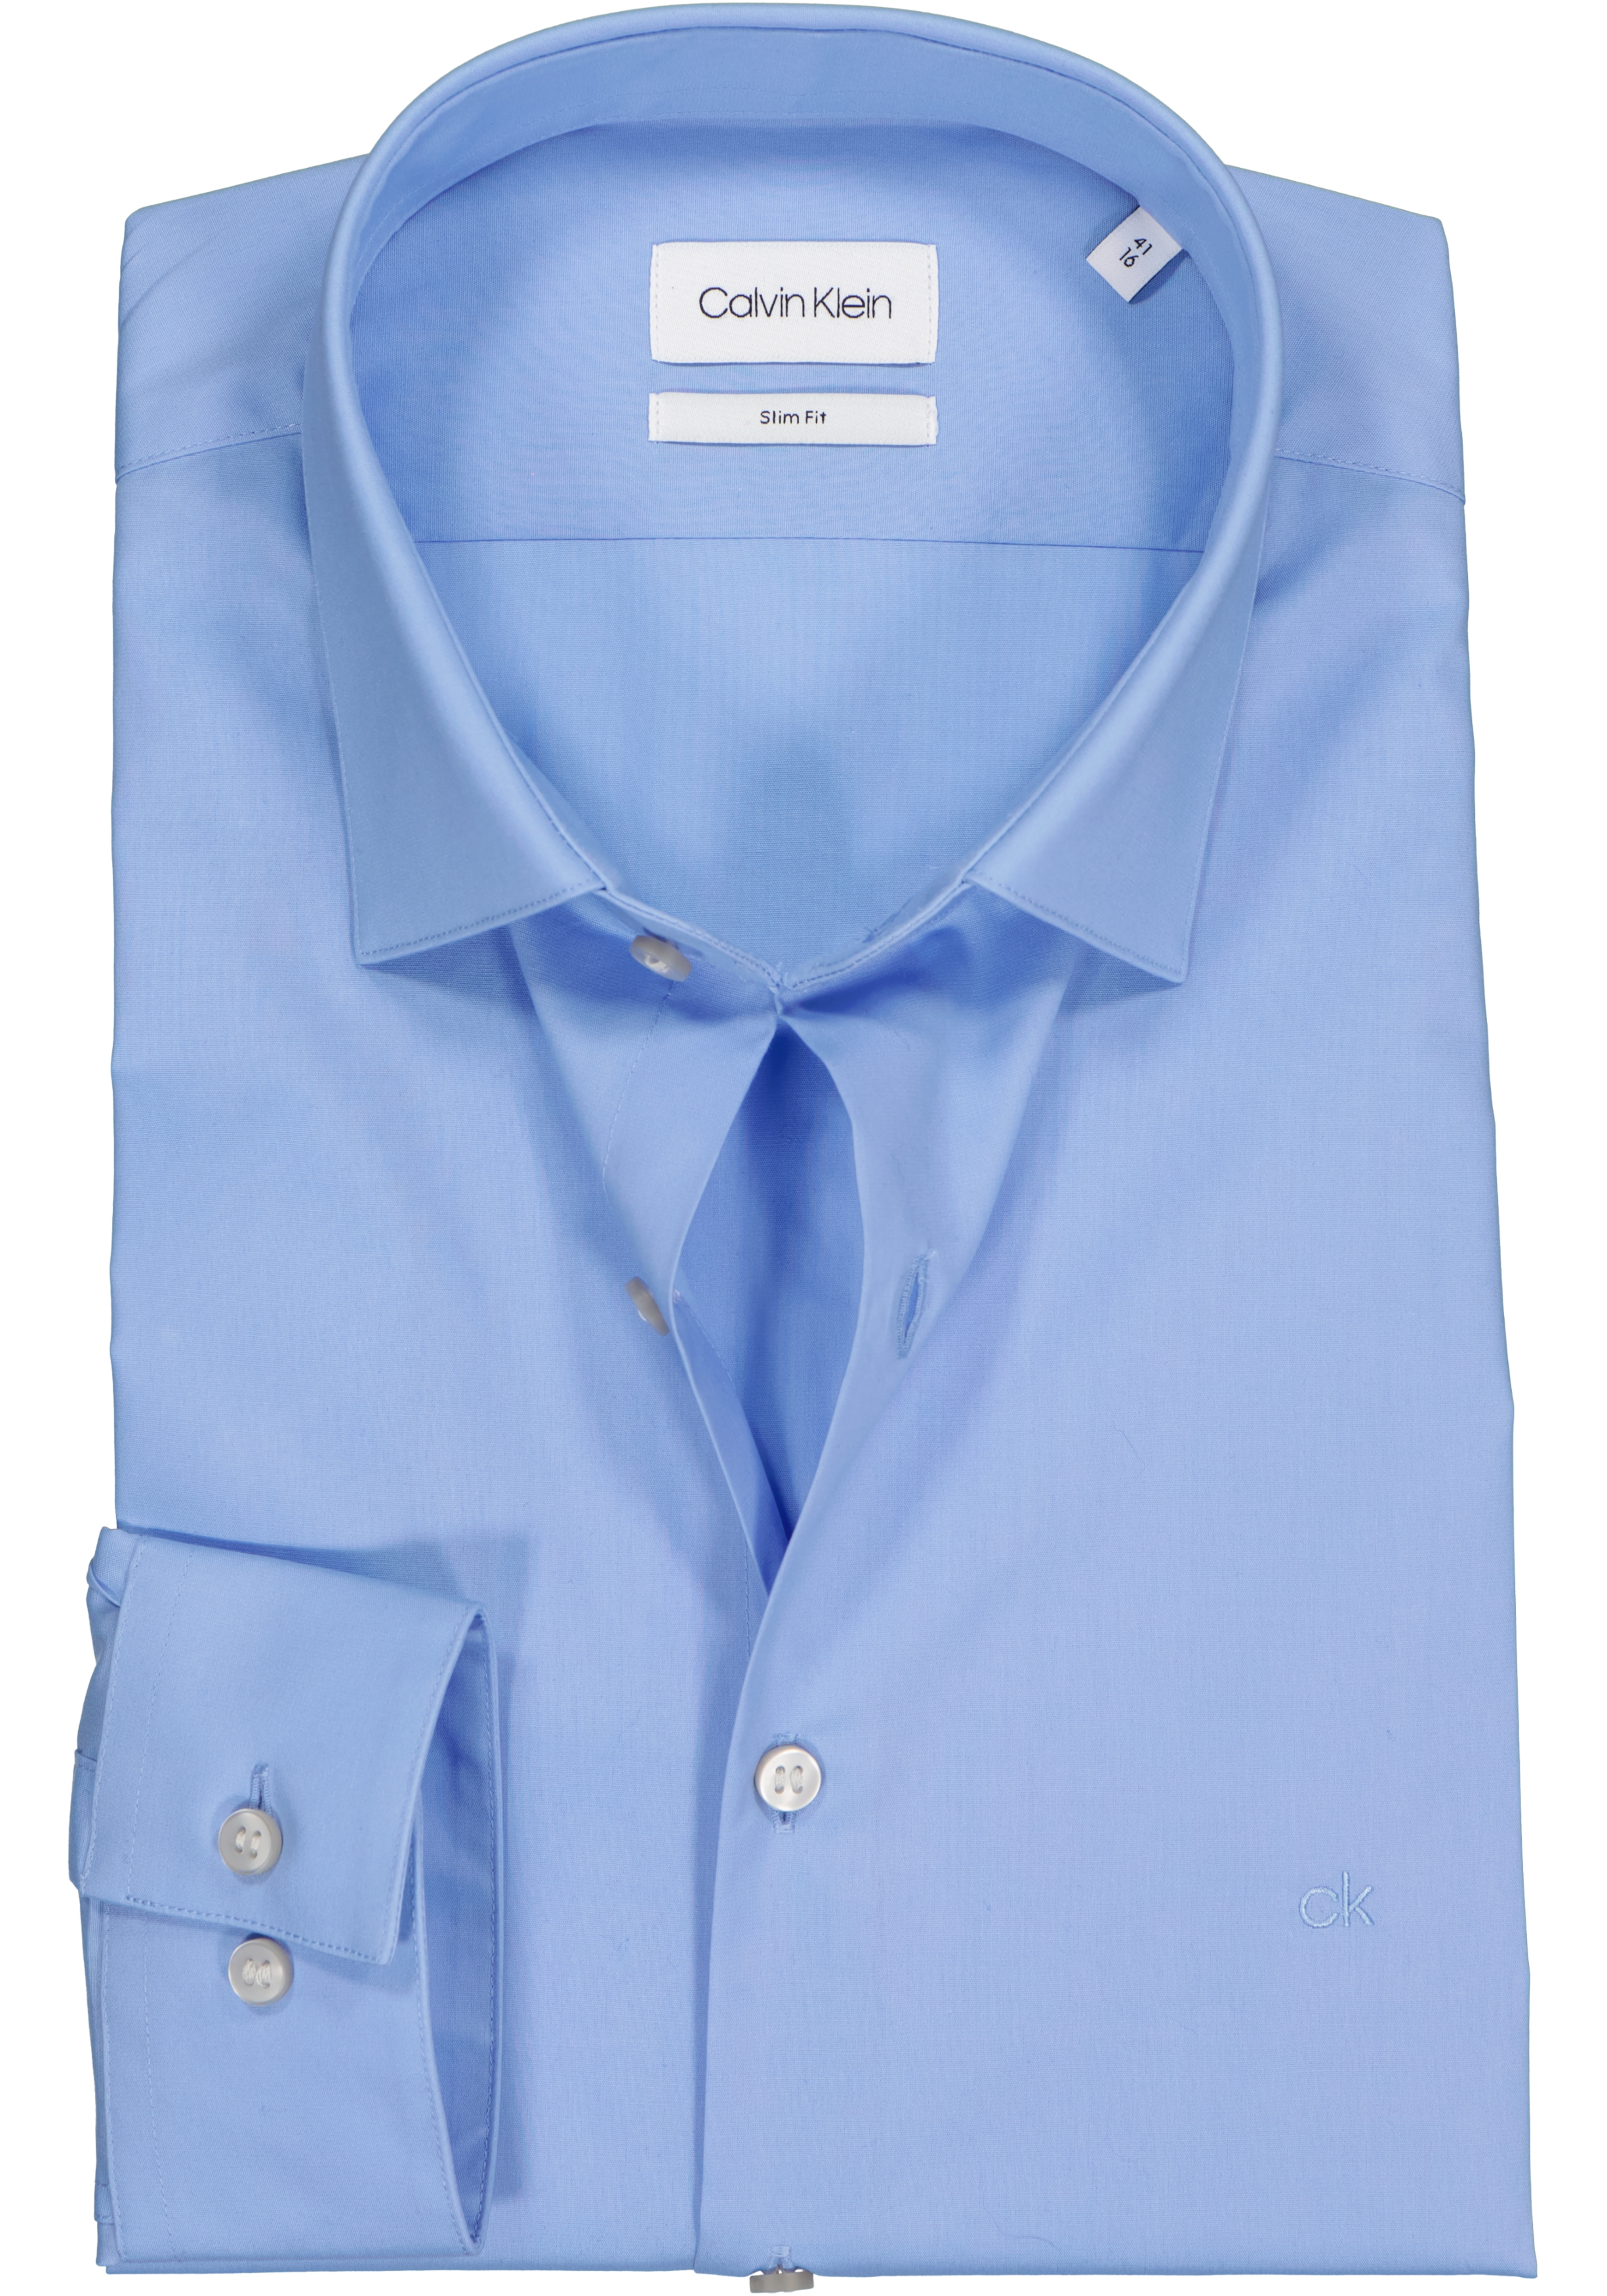 Calvin Klein overhemd, 2-ply stretch, light blue - SALE tot korting